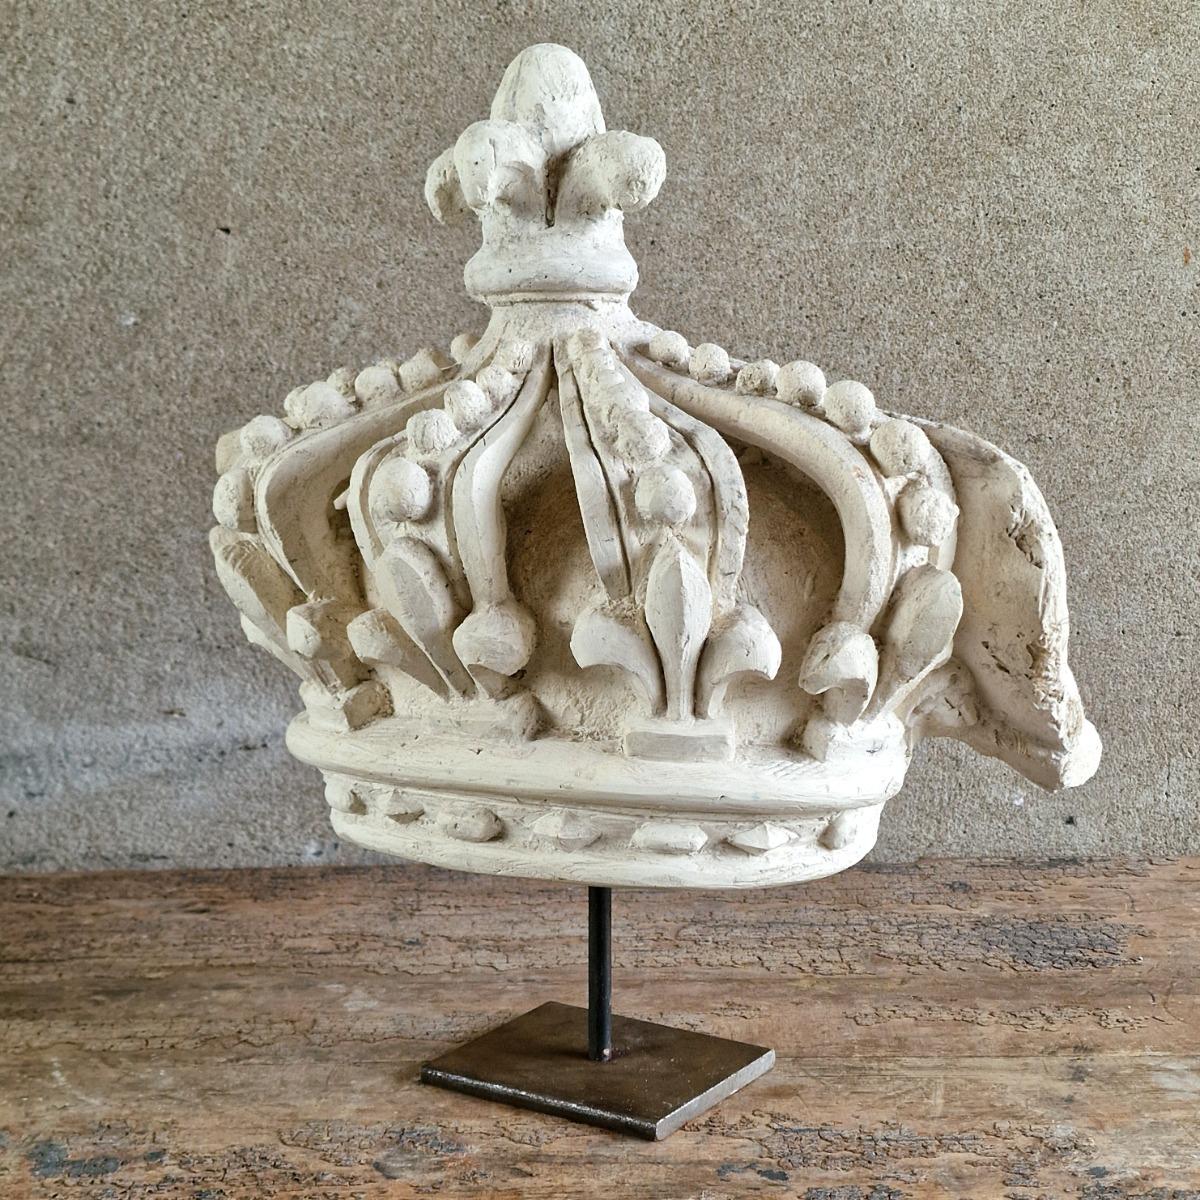 Mounted plaster crown